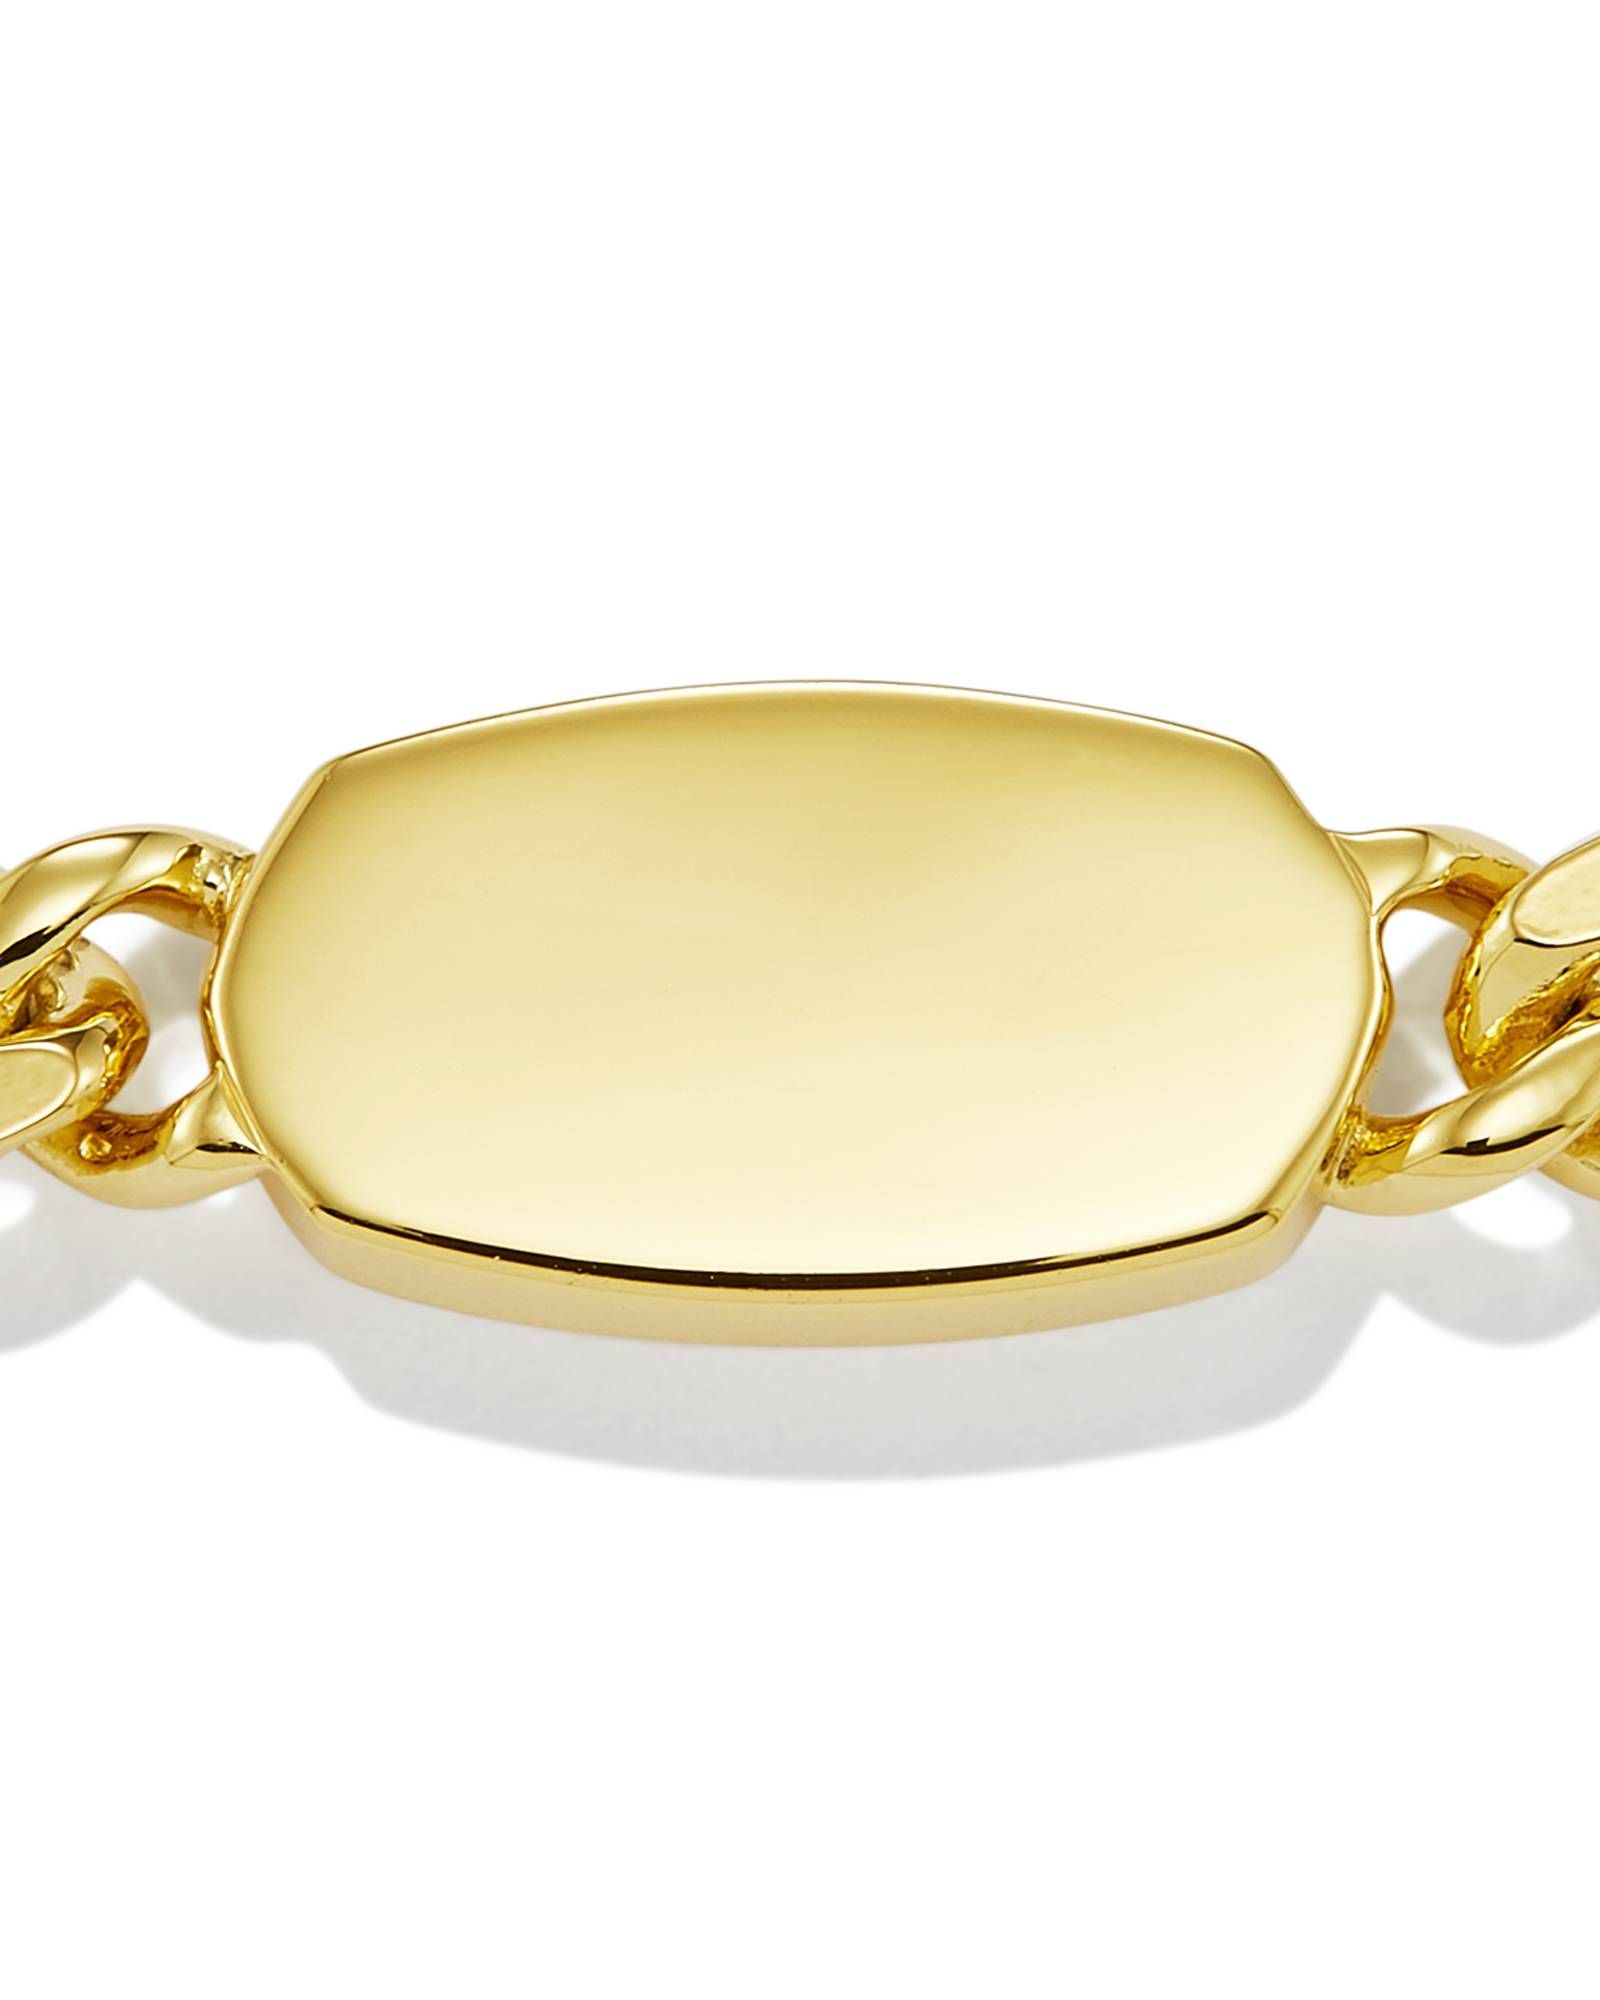 Elaina Curb Chain Bracelet in 18k Gold Vermeil | Kendra Scott | Kendra Scott